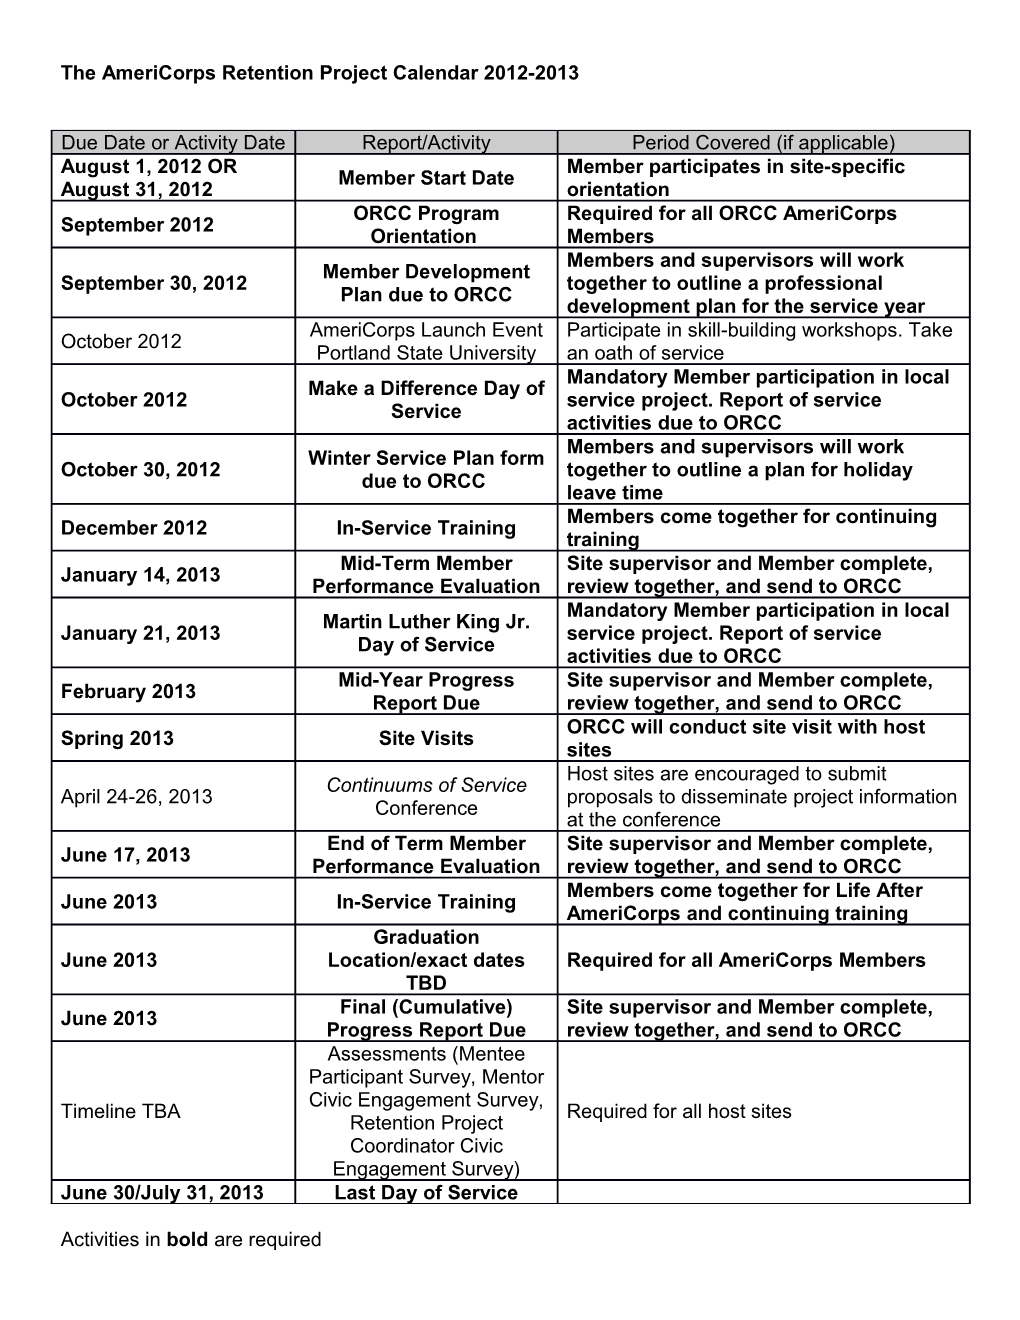 The Americorps Retention Project Calendar 2012-2013